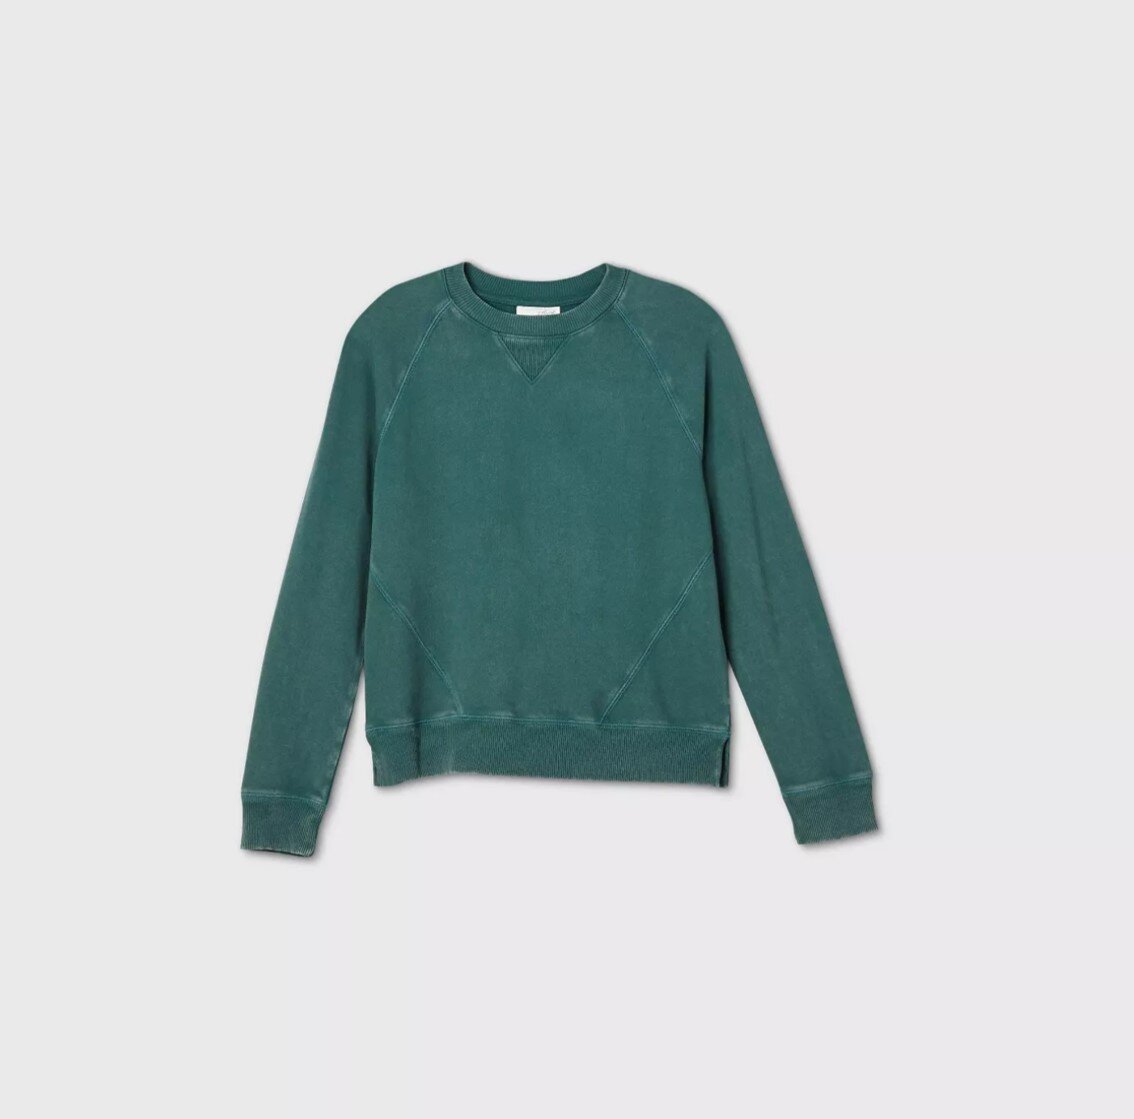 Cotton Green Sweatshirt, $18